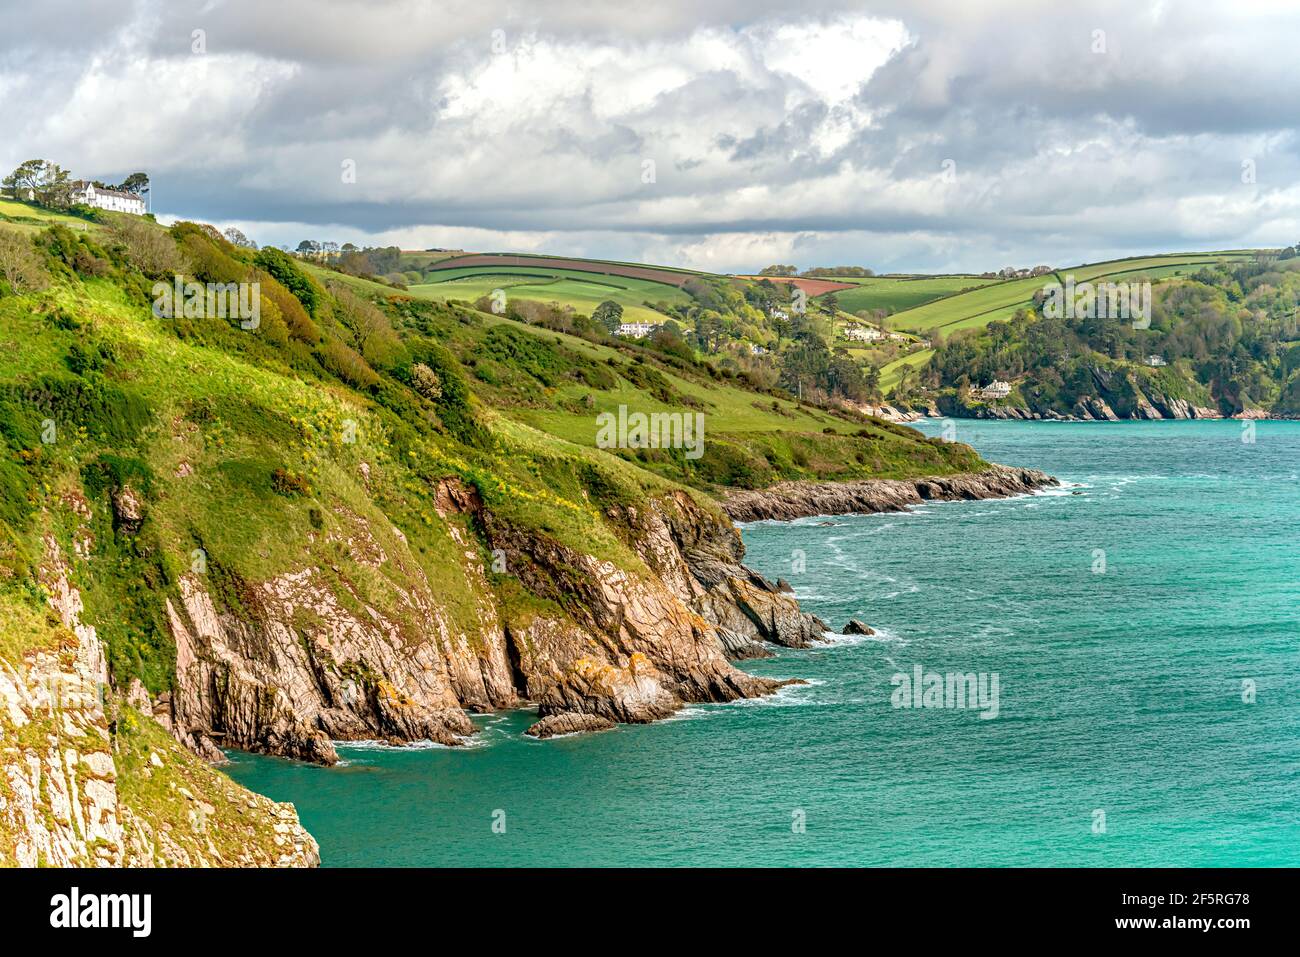 Scenic coastline at the mouth of the Dart River, Devon, England, UK Stock Photo